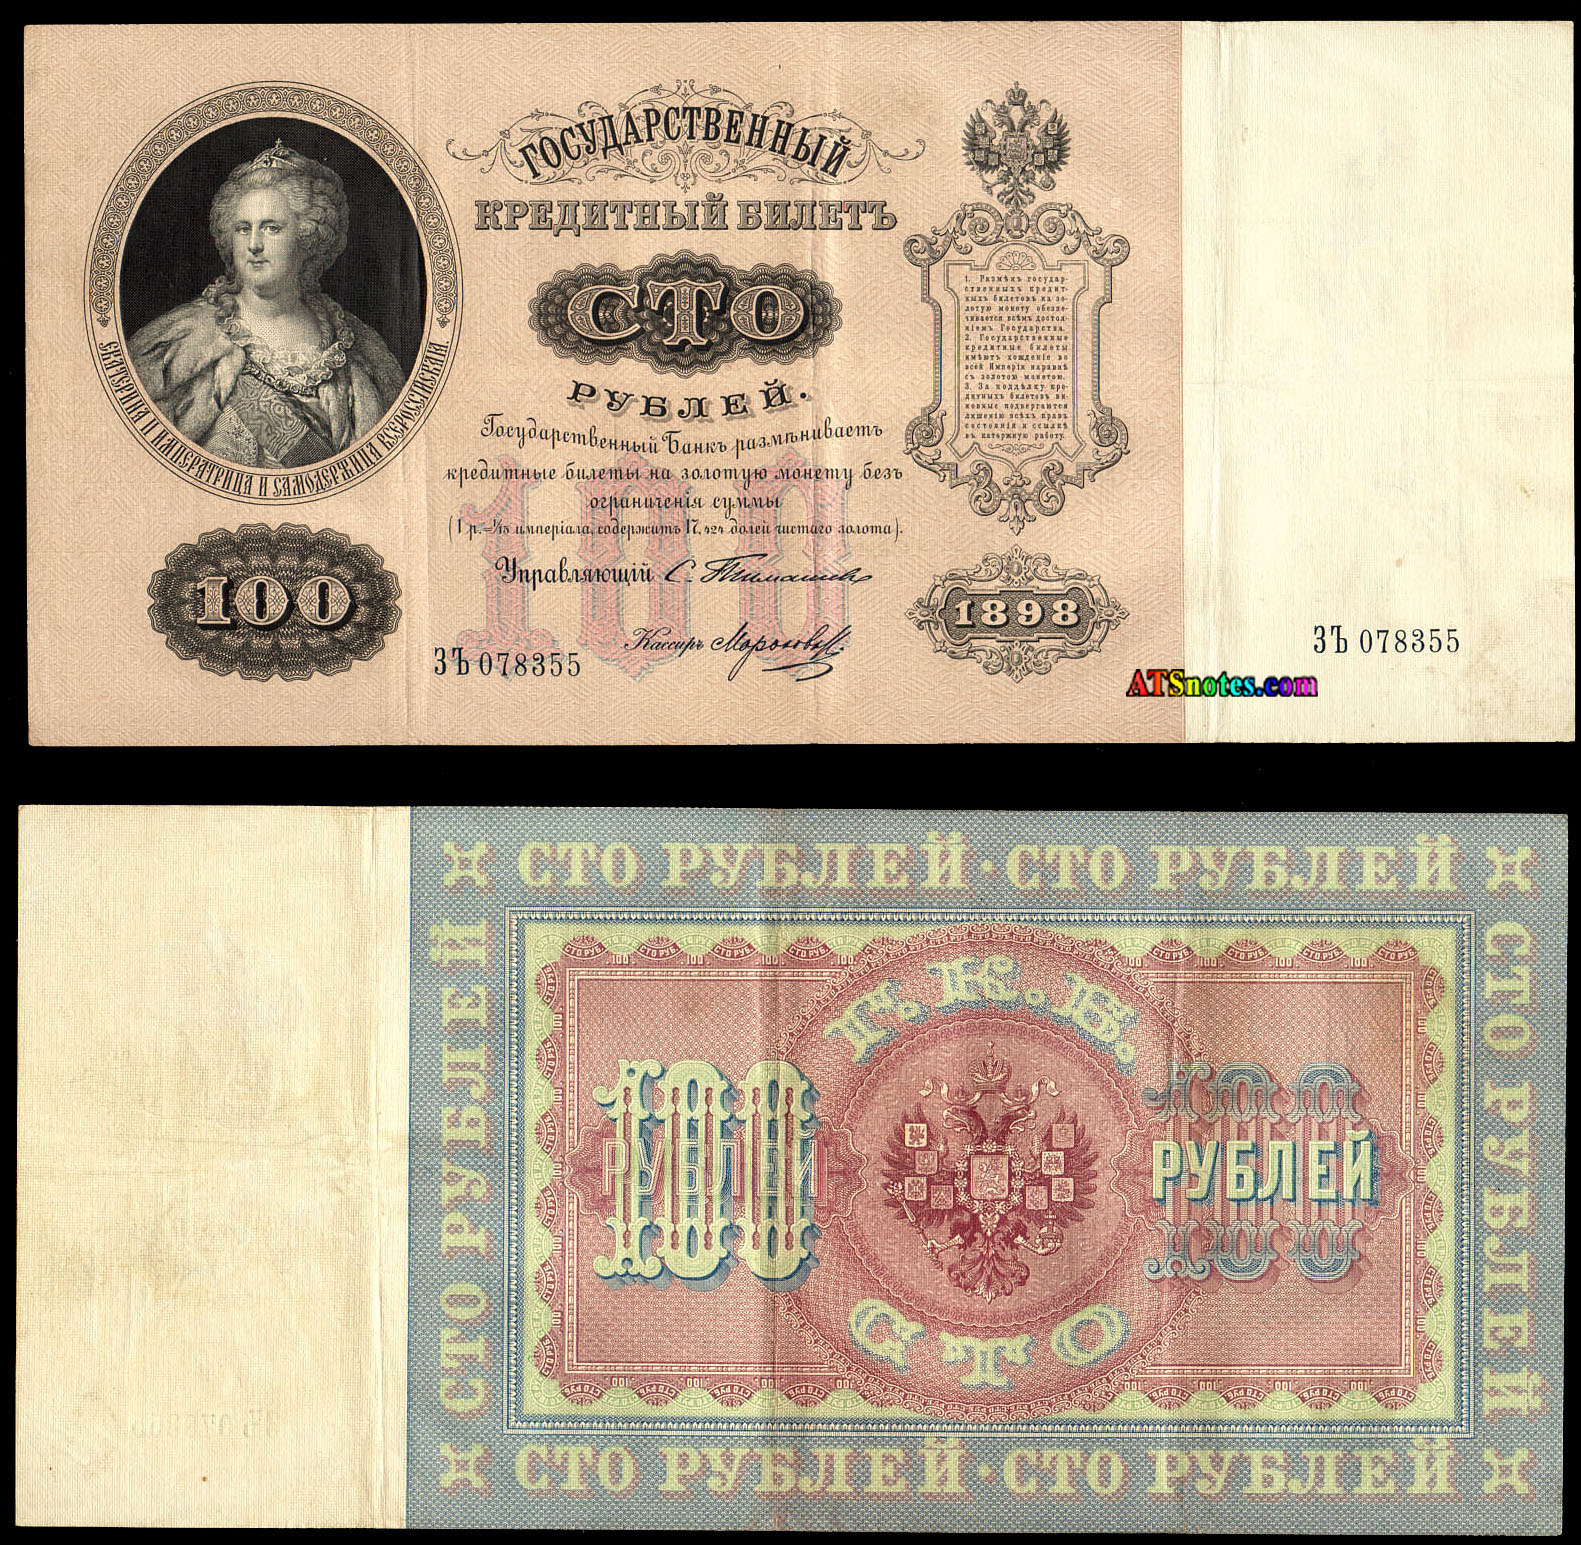 3 Roubles 1905 Lot Russian Empire money 5 Roubles 1909